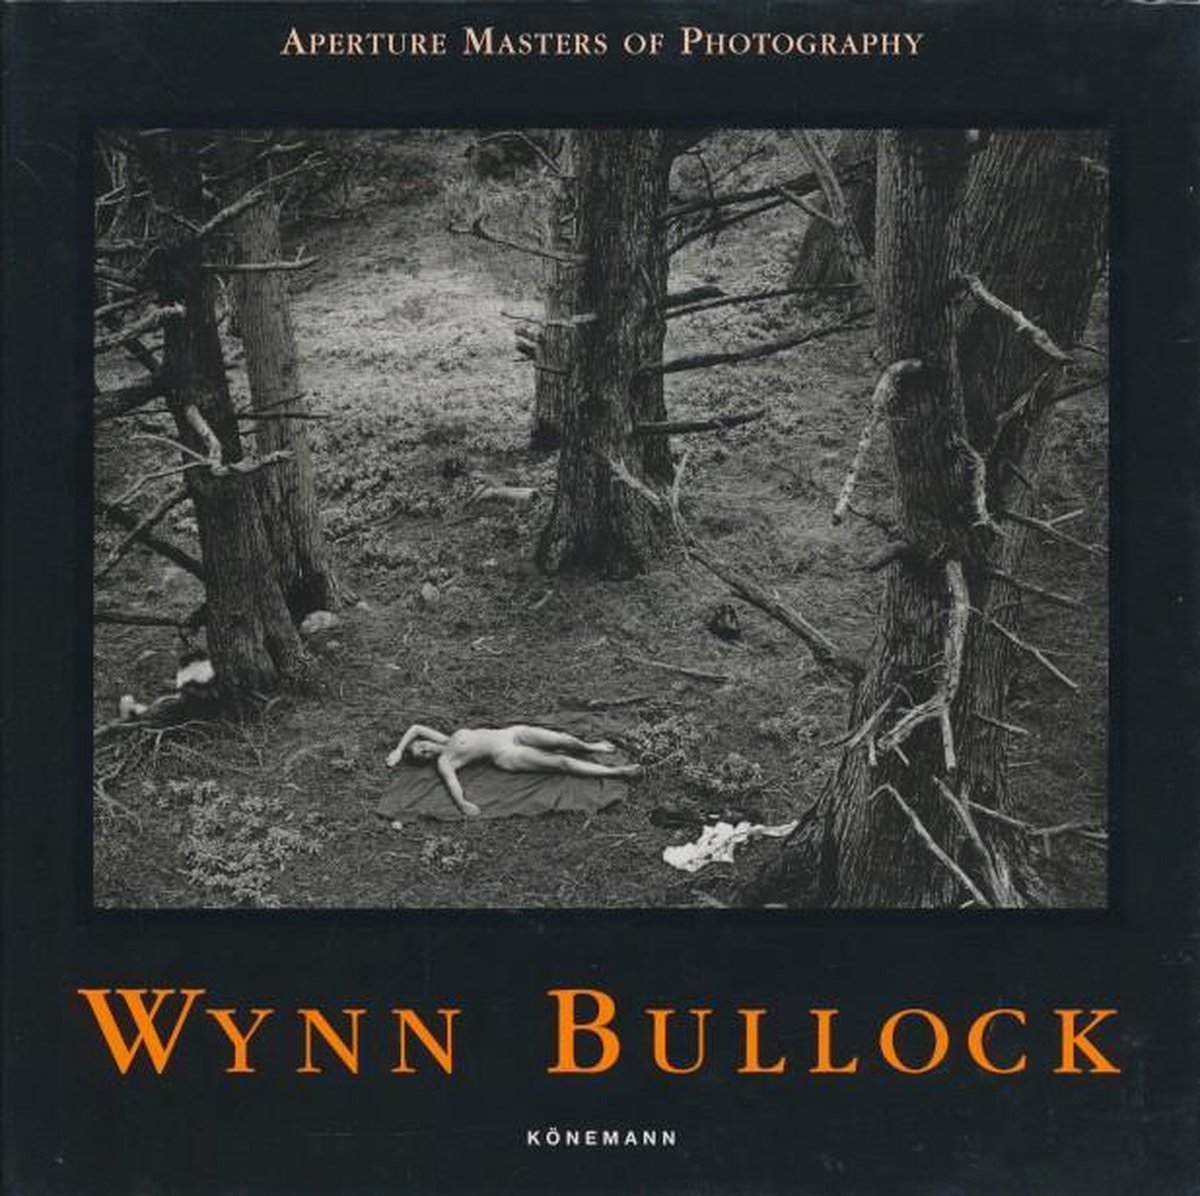 Aperture Masters of Photography - Wynn Bullock